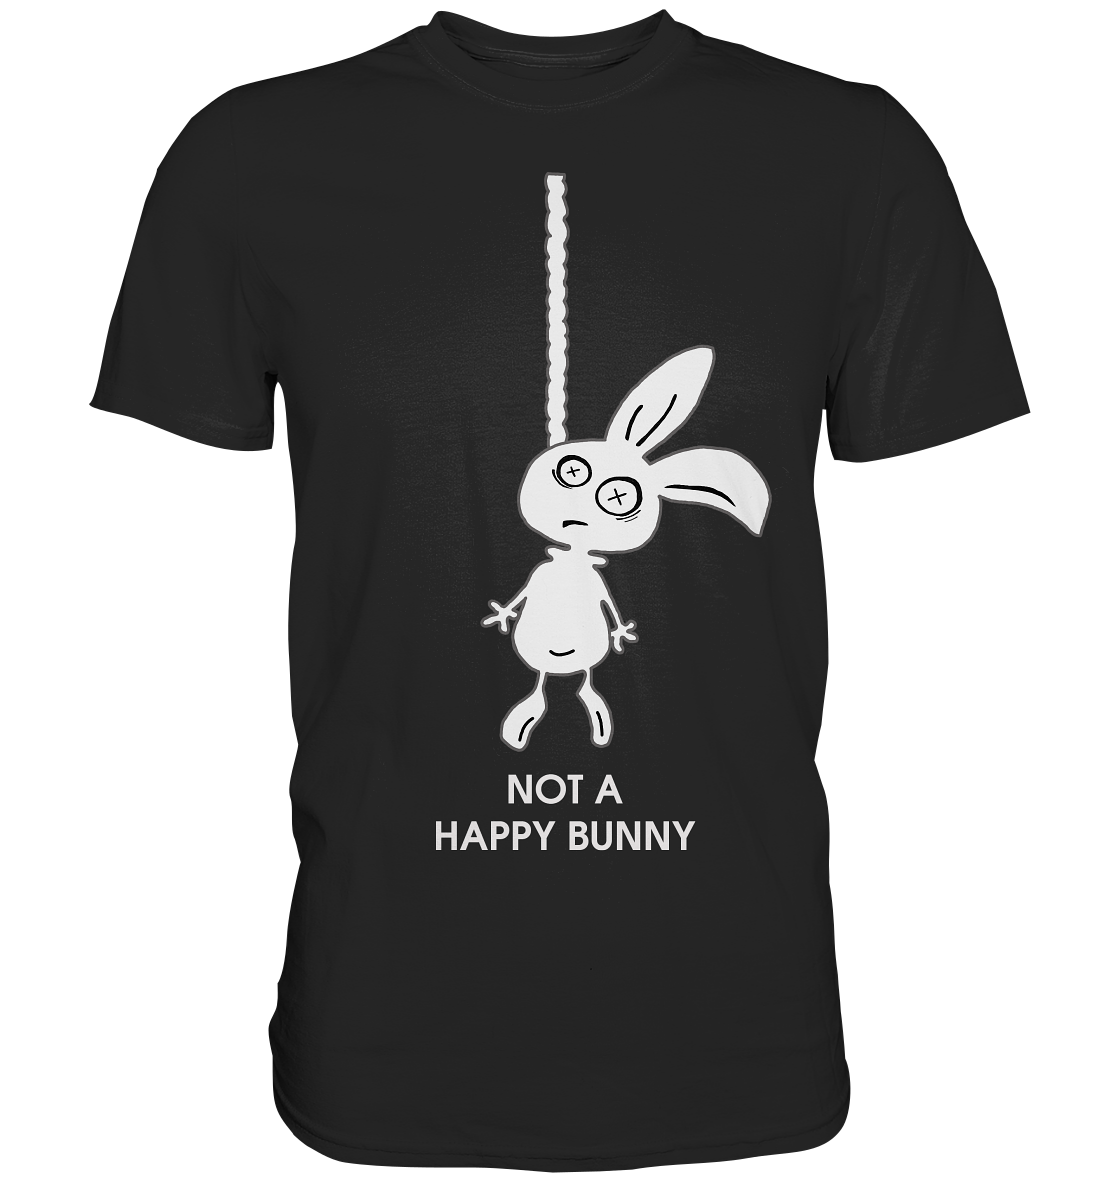 Not a happy bunny. - Unisex Premium Shirt